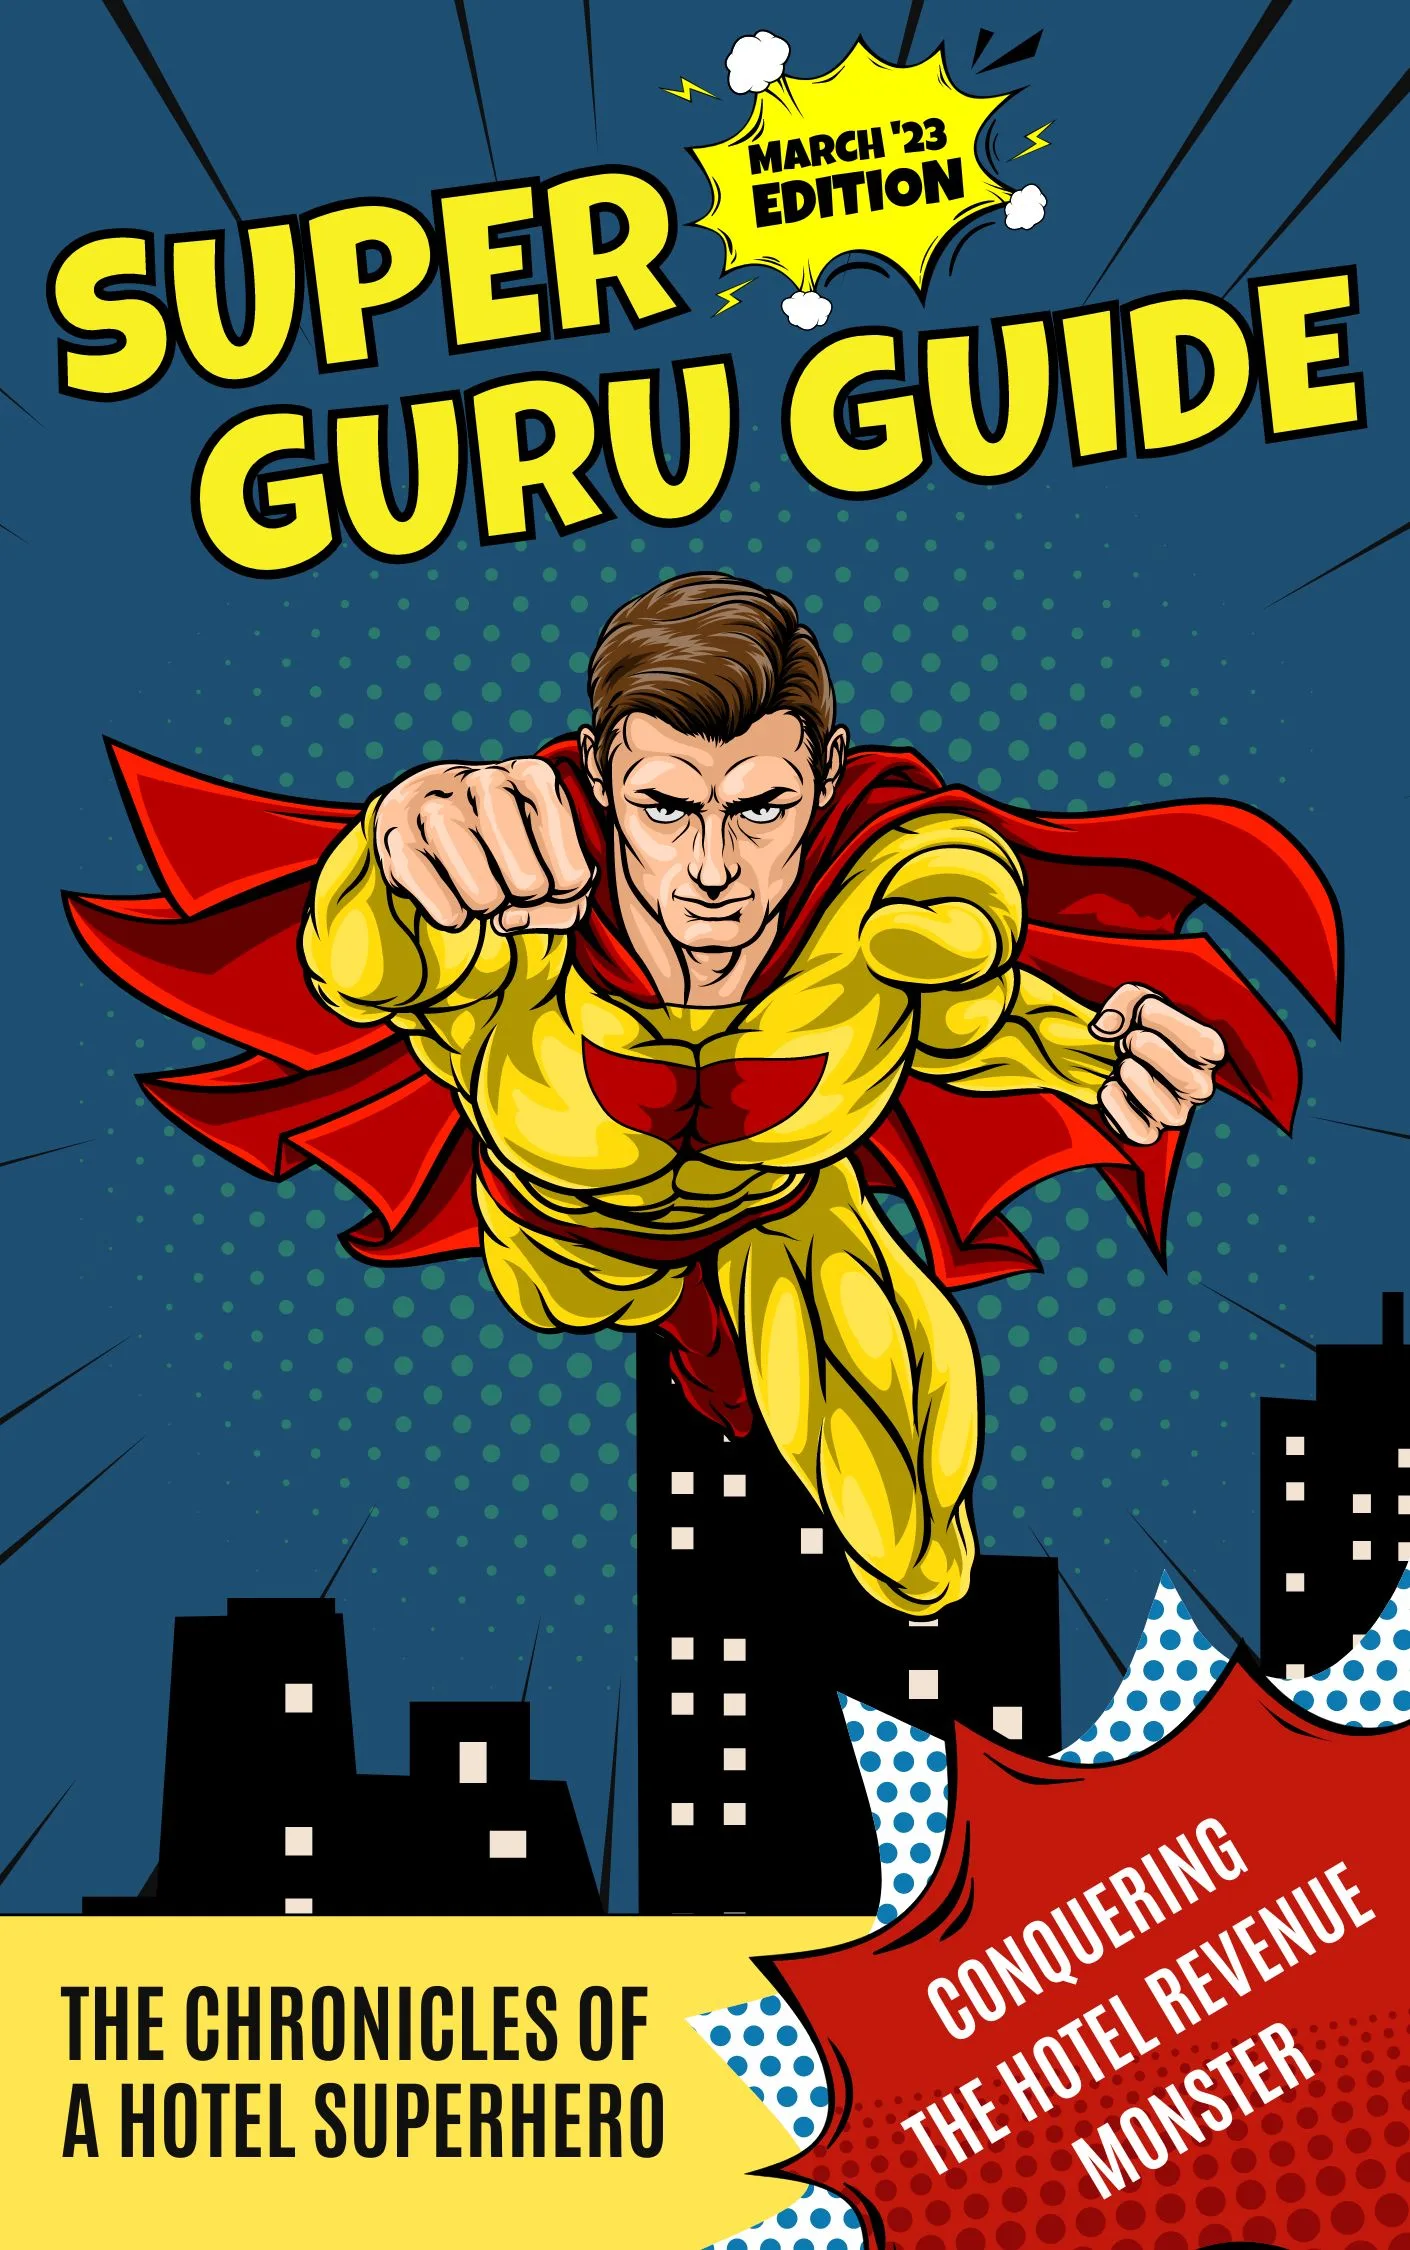 Super Guru Guide - conquering the hotel revenue monster - Download